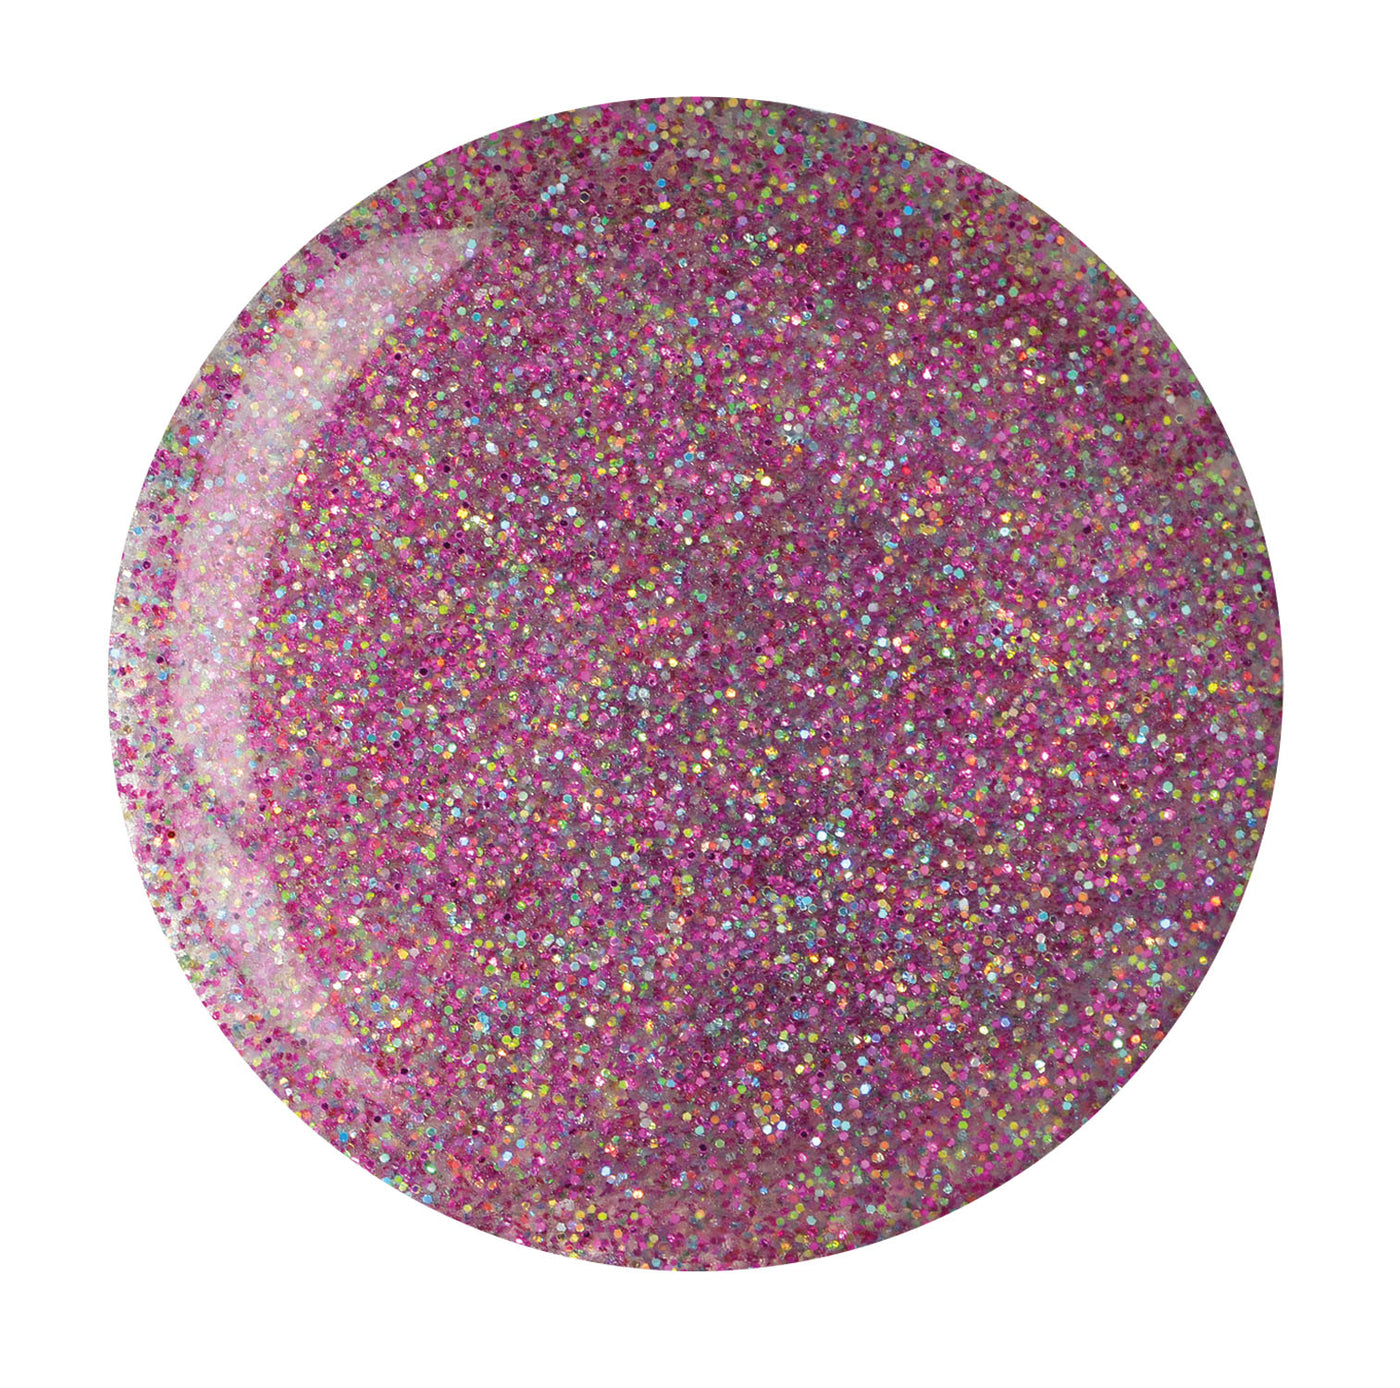 CP Dipping Powder14g - 5568-5 Deep Purple Glitter